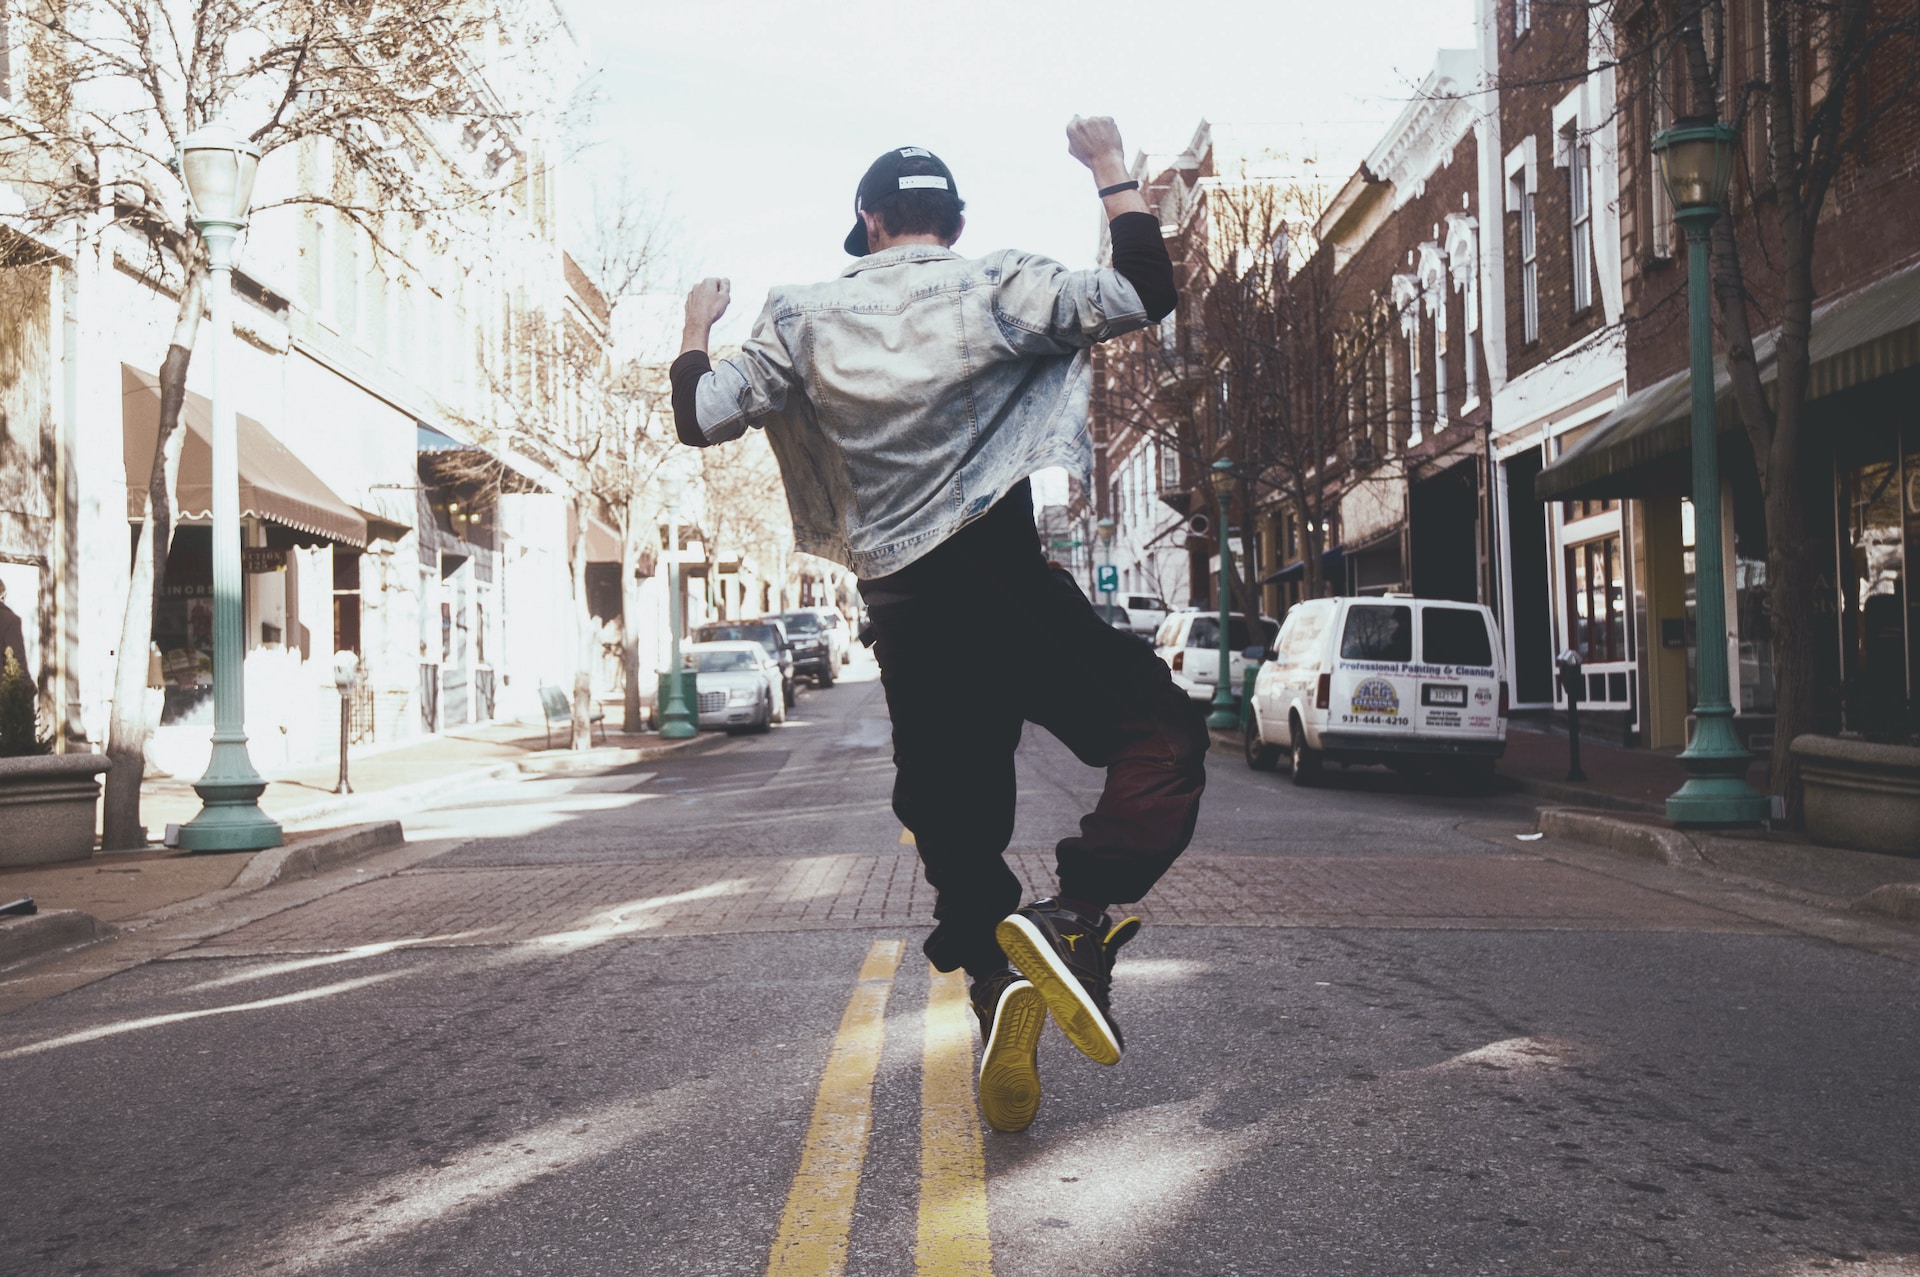  jumping for joy on the sidewalk